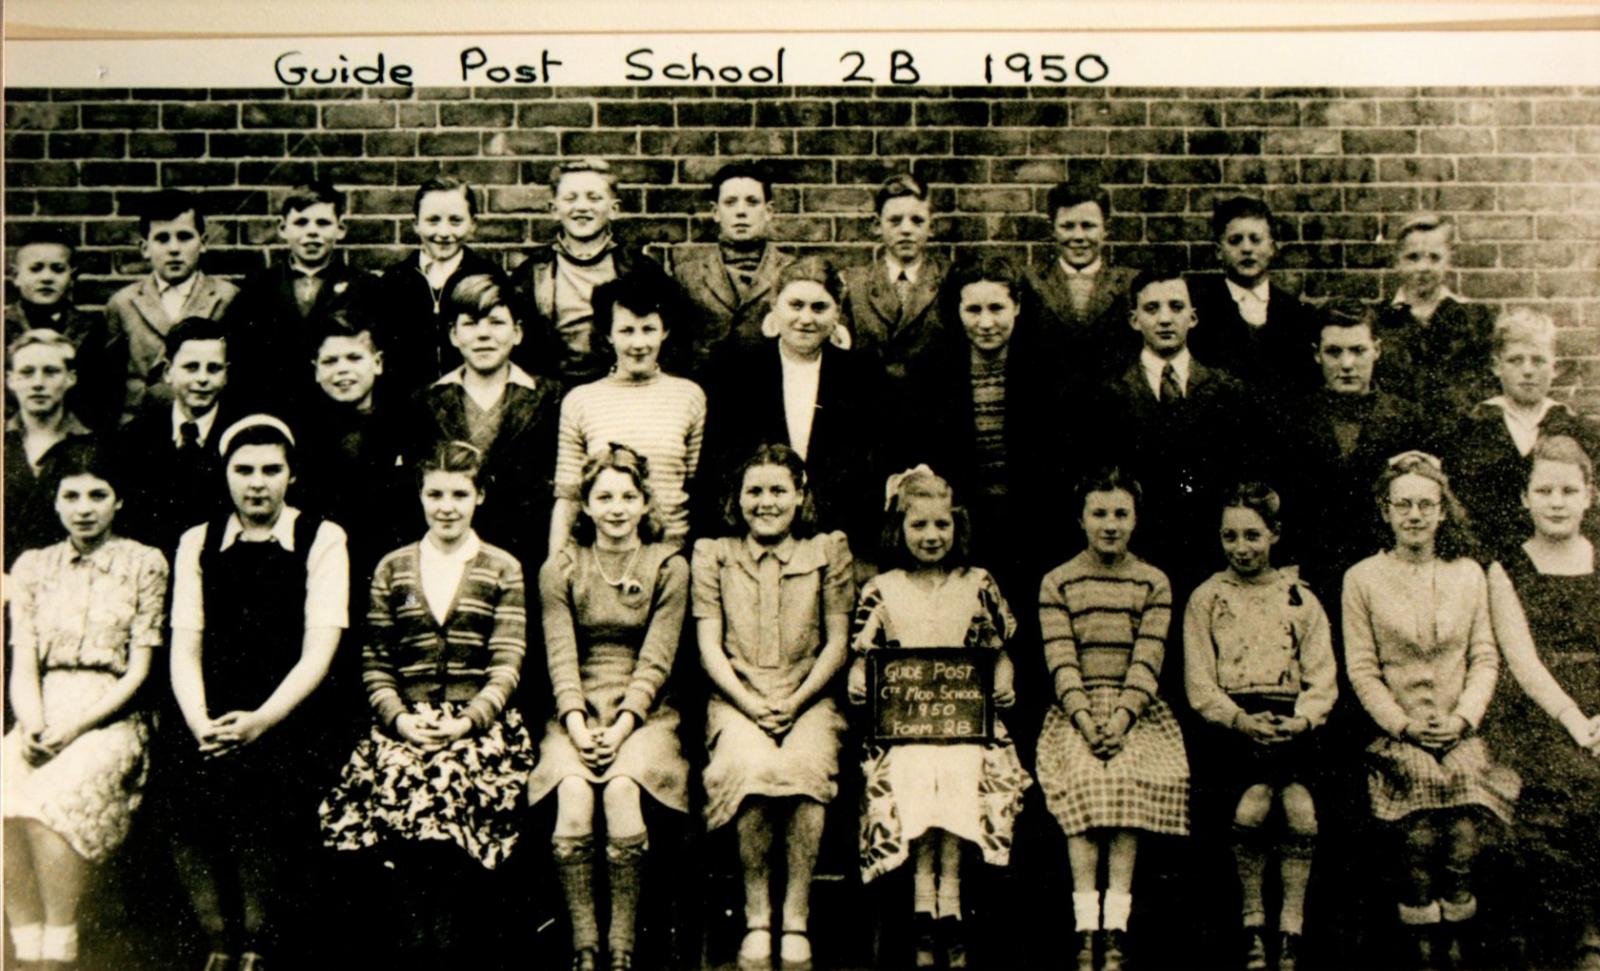 guide post school photo 1950